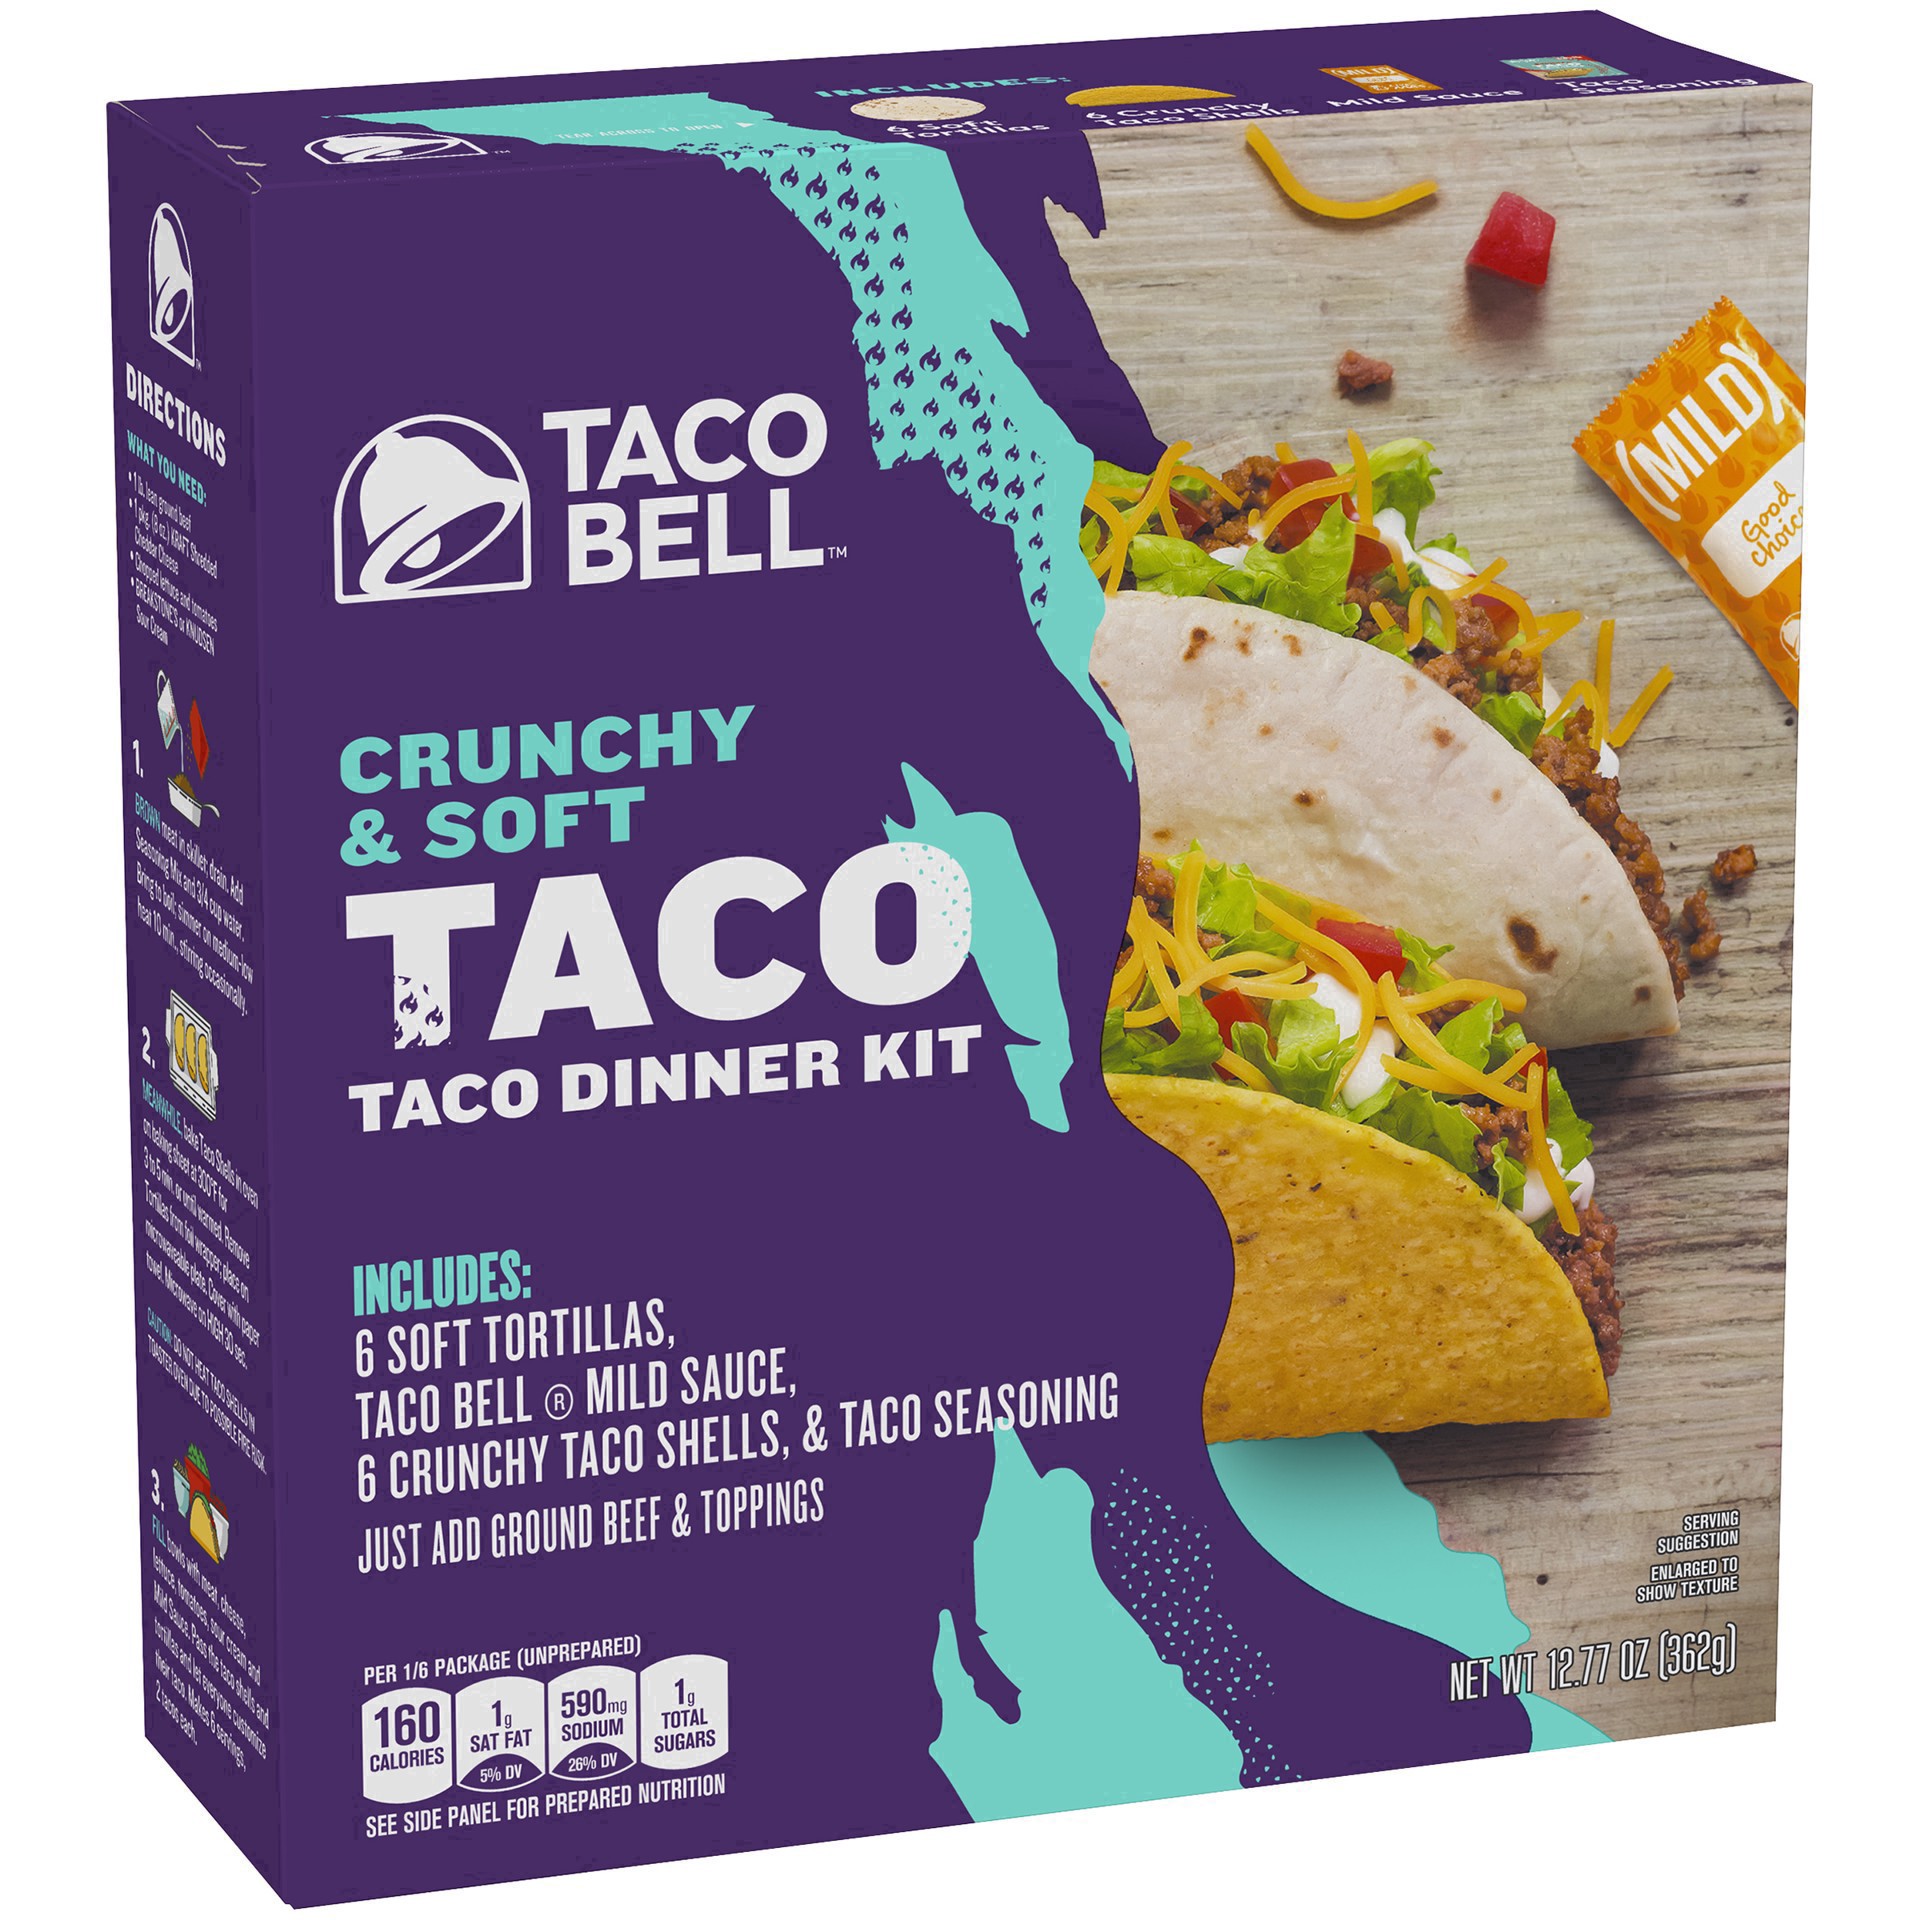 slide 54 of 101, Taco Bell Crunchy & Soft Taco Cravings Kit with 6 Soft Tortillas, 6 Crunchy Taco Shells, Taco Bell Mild Sauce & Seasoning, 12.77 oz Box, 1 ea